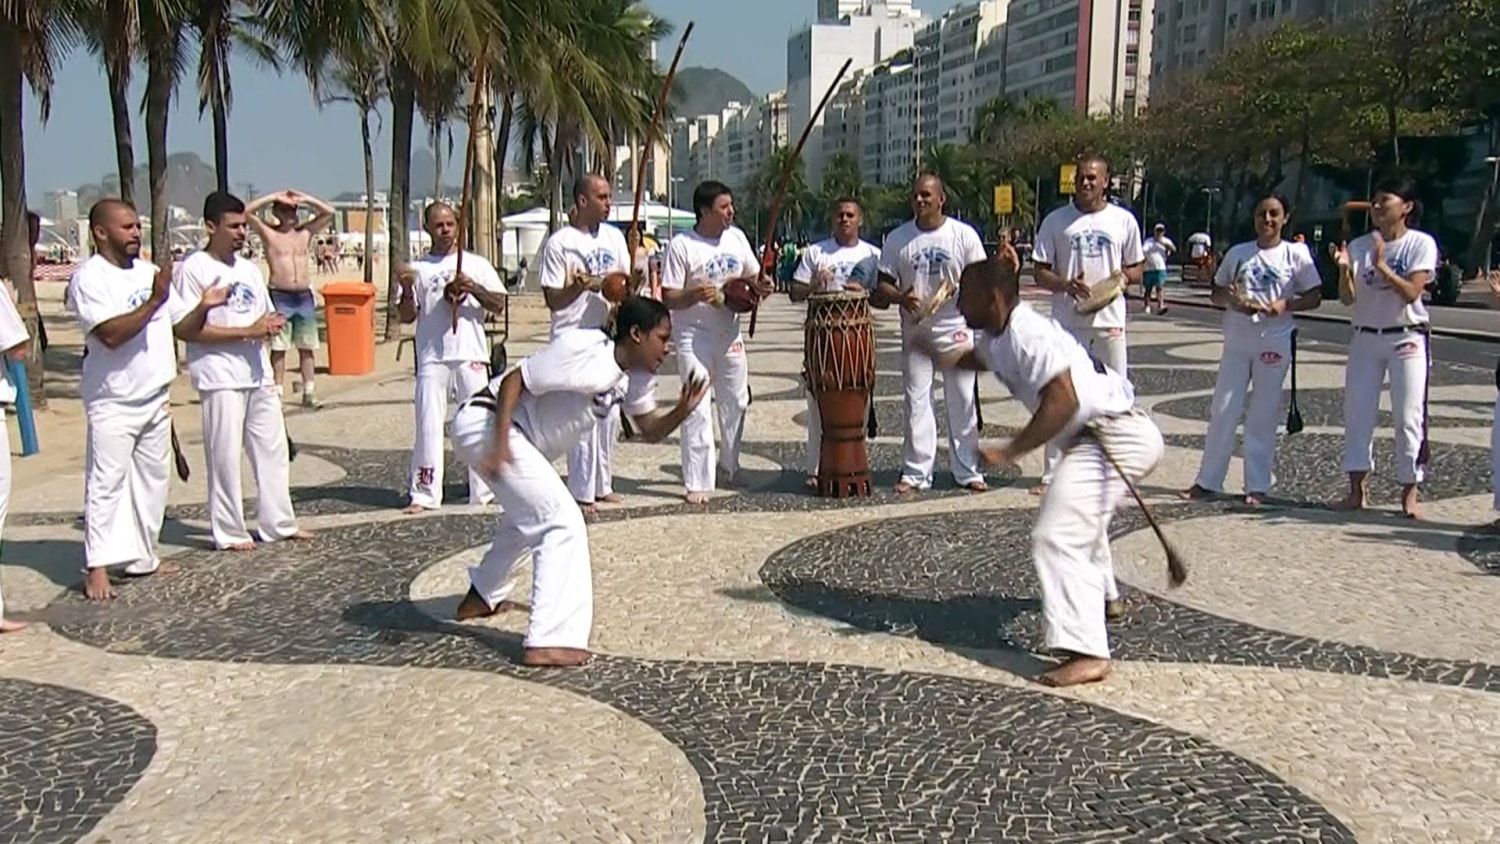 Capoeira: Meet Brazil's unique blend of martial art and dance